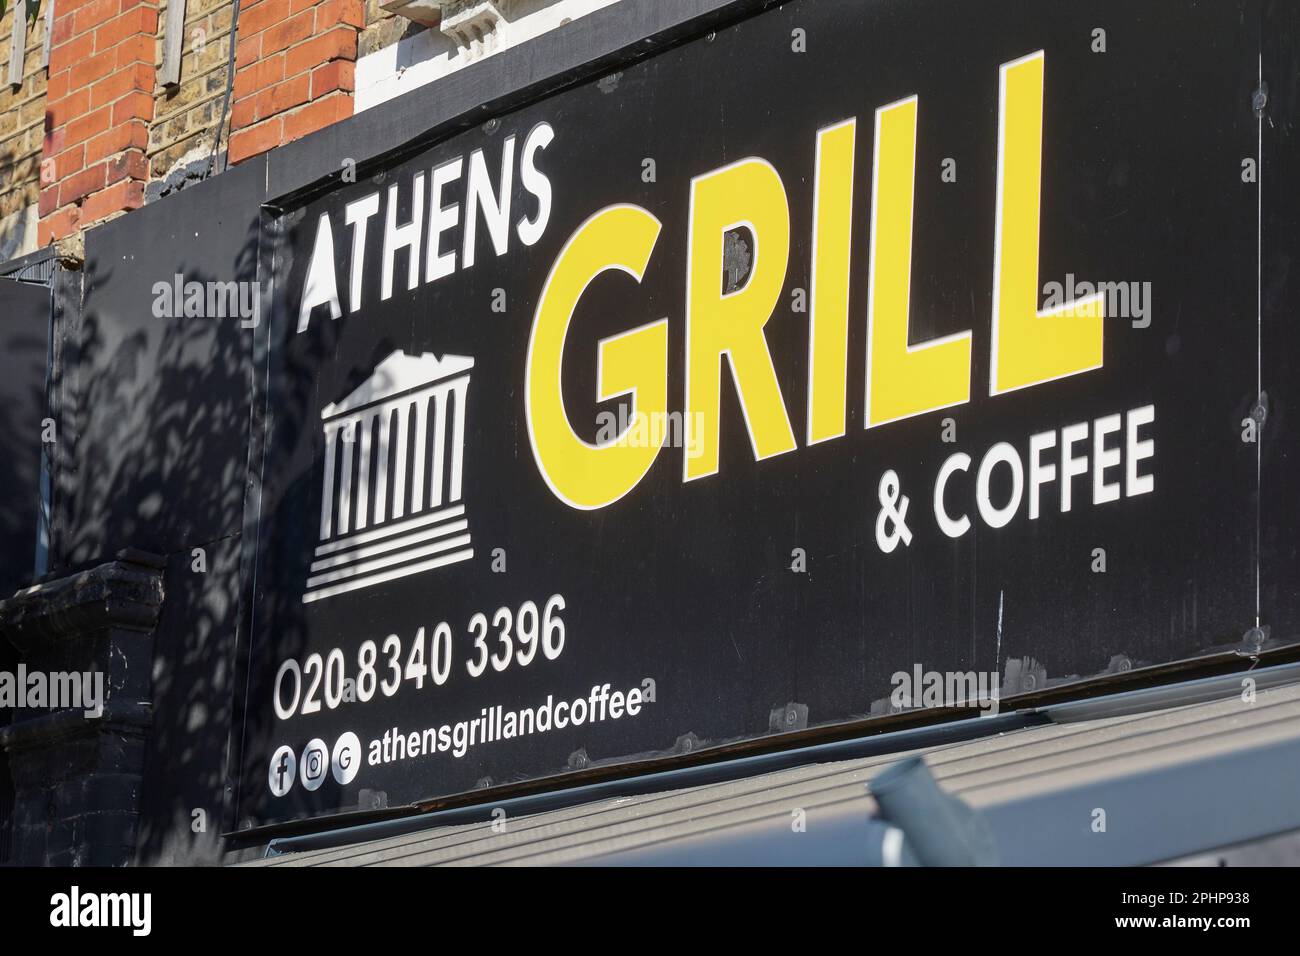 Athens Grill & Coffee, Wightman Road, Harringay Ladder, London Borough of Haringey, England, Großbritannien. Stockfoto